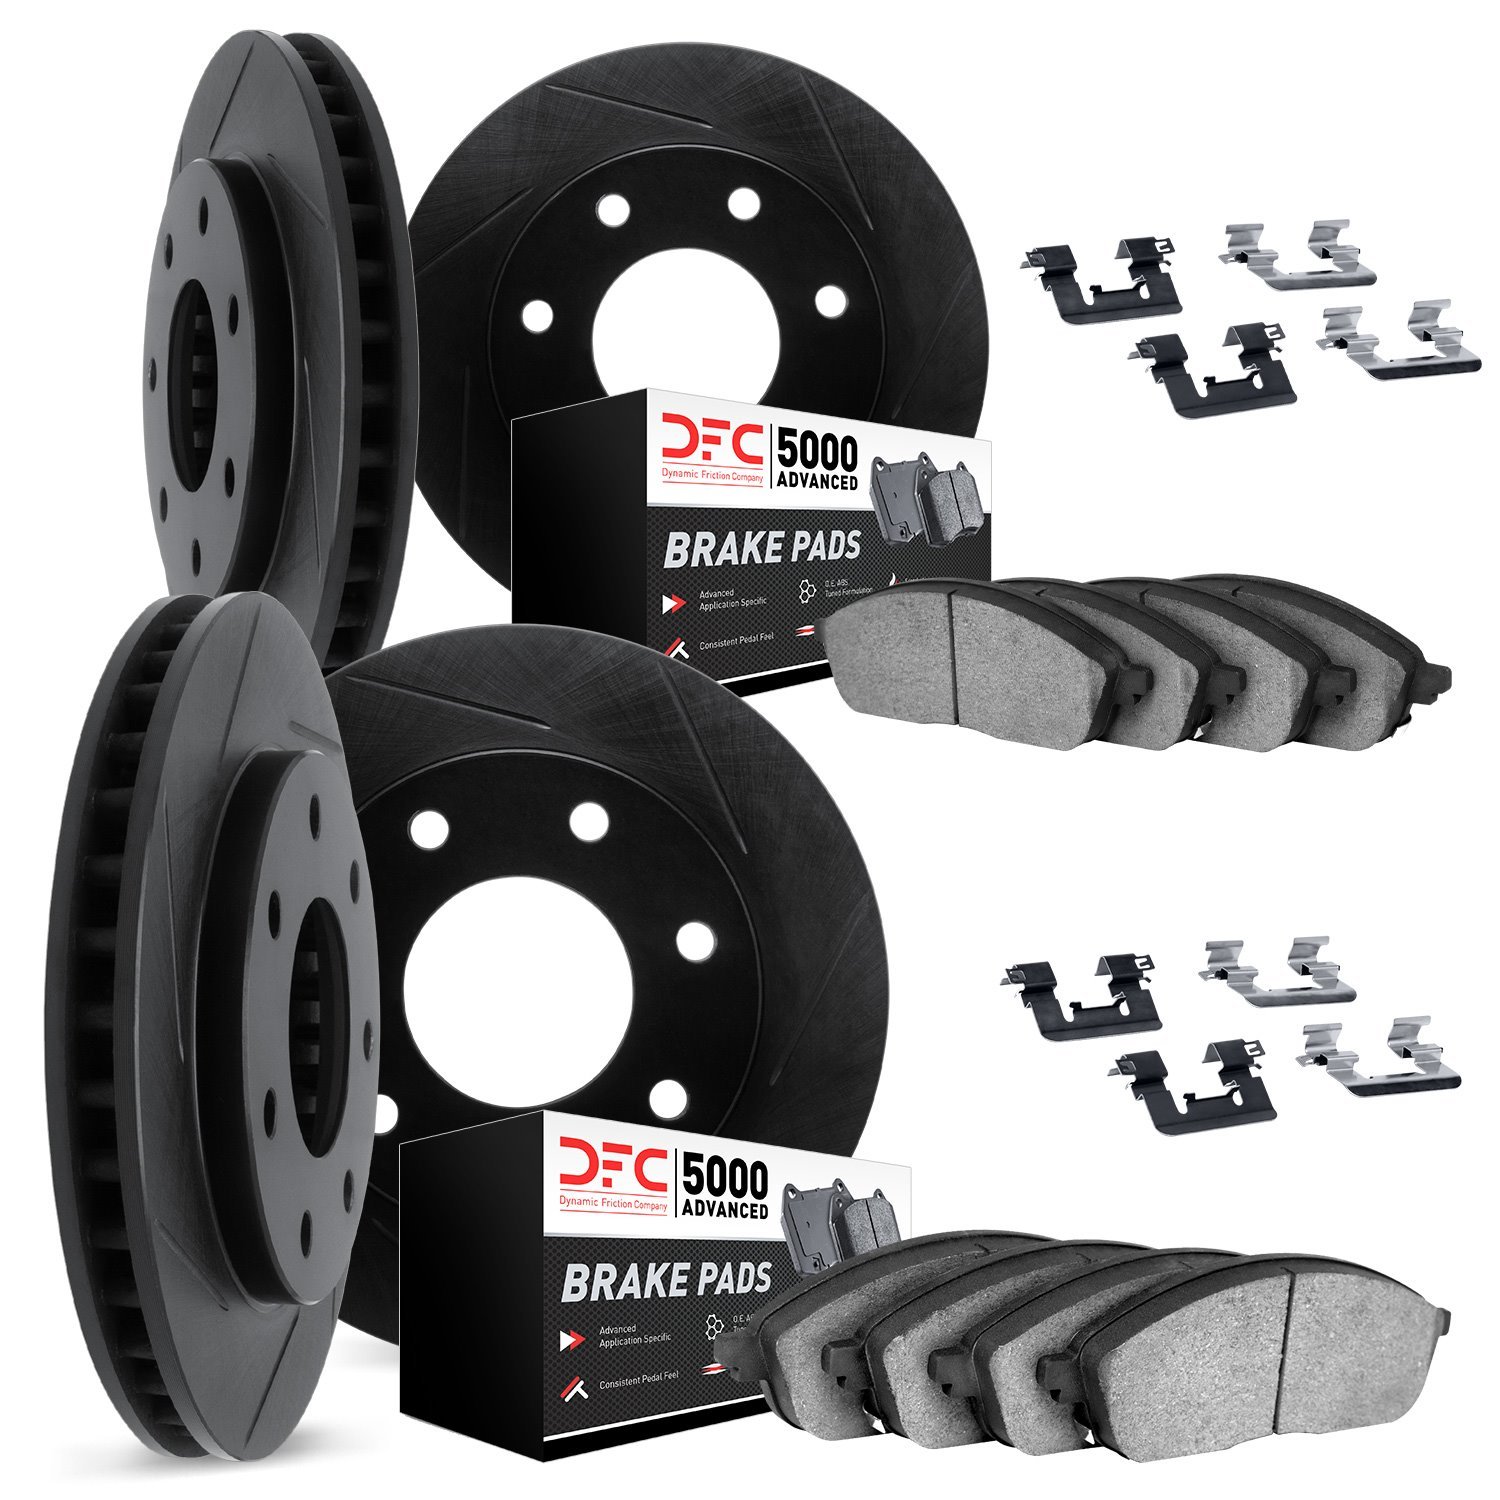 3514-54111 Slotted Brake Rotors w/5000 Advanced Brake Pads Kit & Hardware [Black], 2012-2014 Ford/Lincoln/Mercury/Mazda, Positio